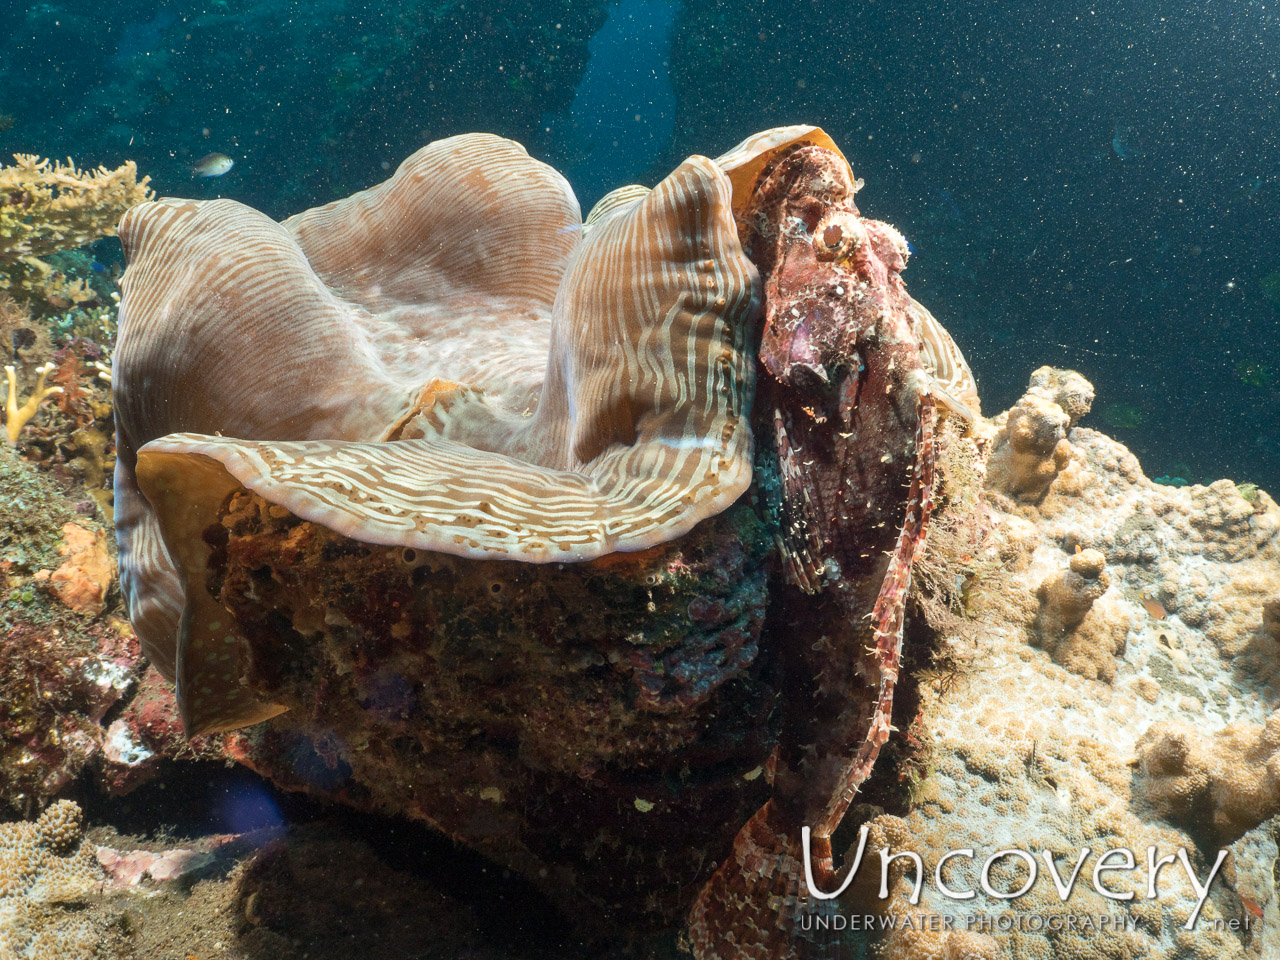 Giant Clam, Tassled Scorpionfish (scorpaenopsis Oxycephala), photo taken in Indonesia, Bali, Tulamben, Liberty Wreck